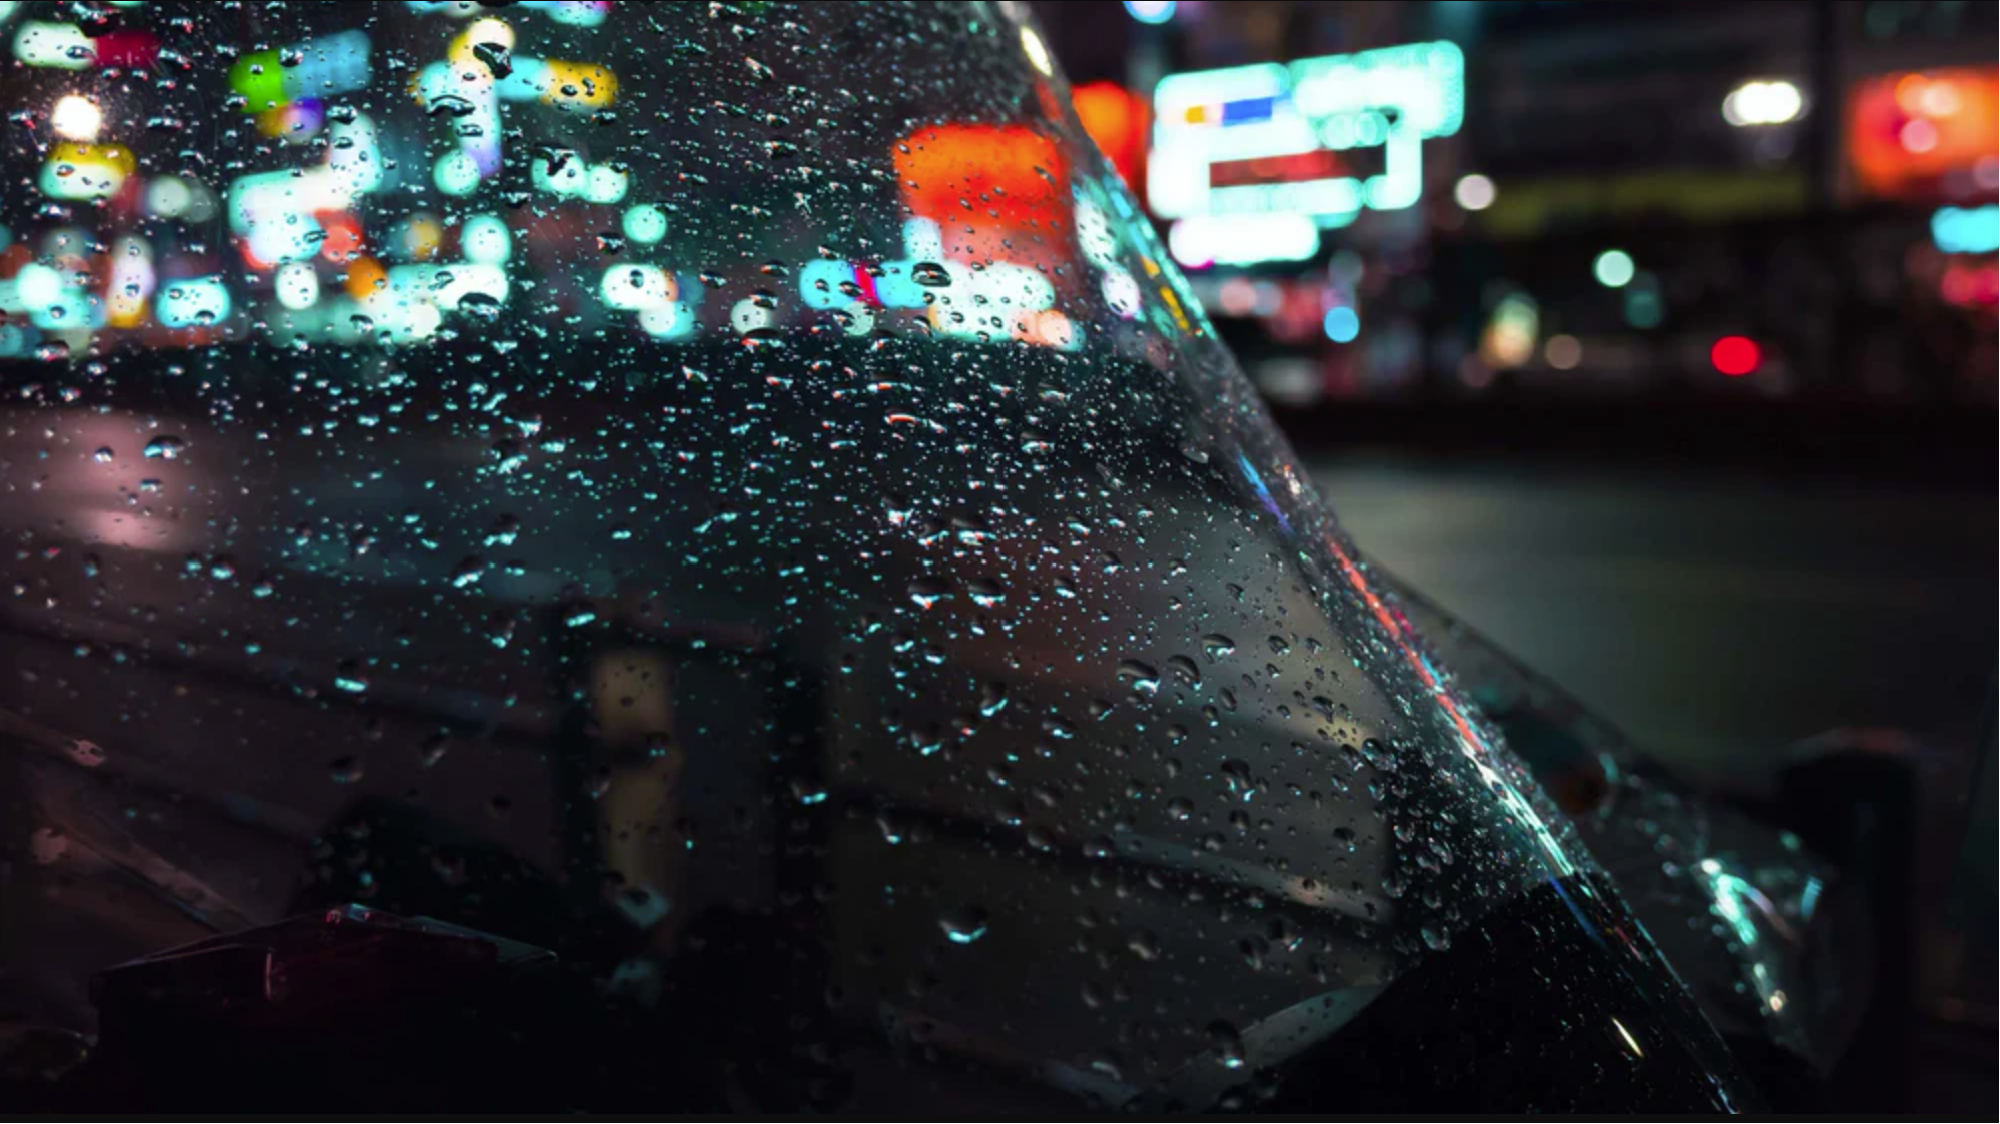 Veemo windshield covered in rain